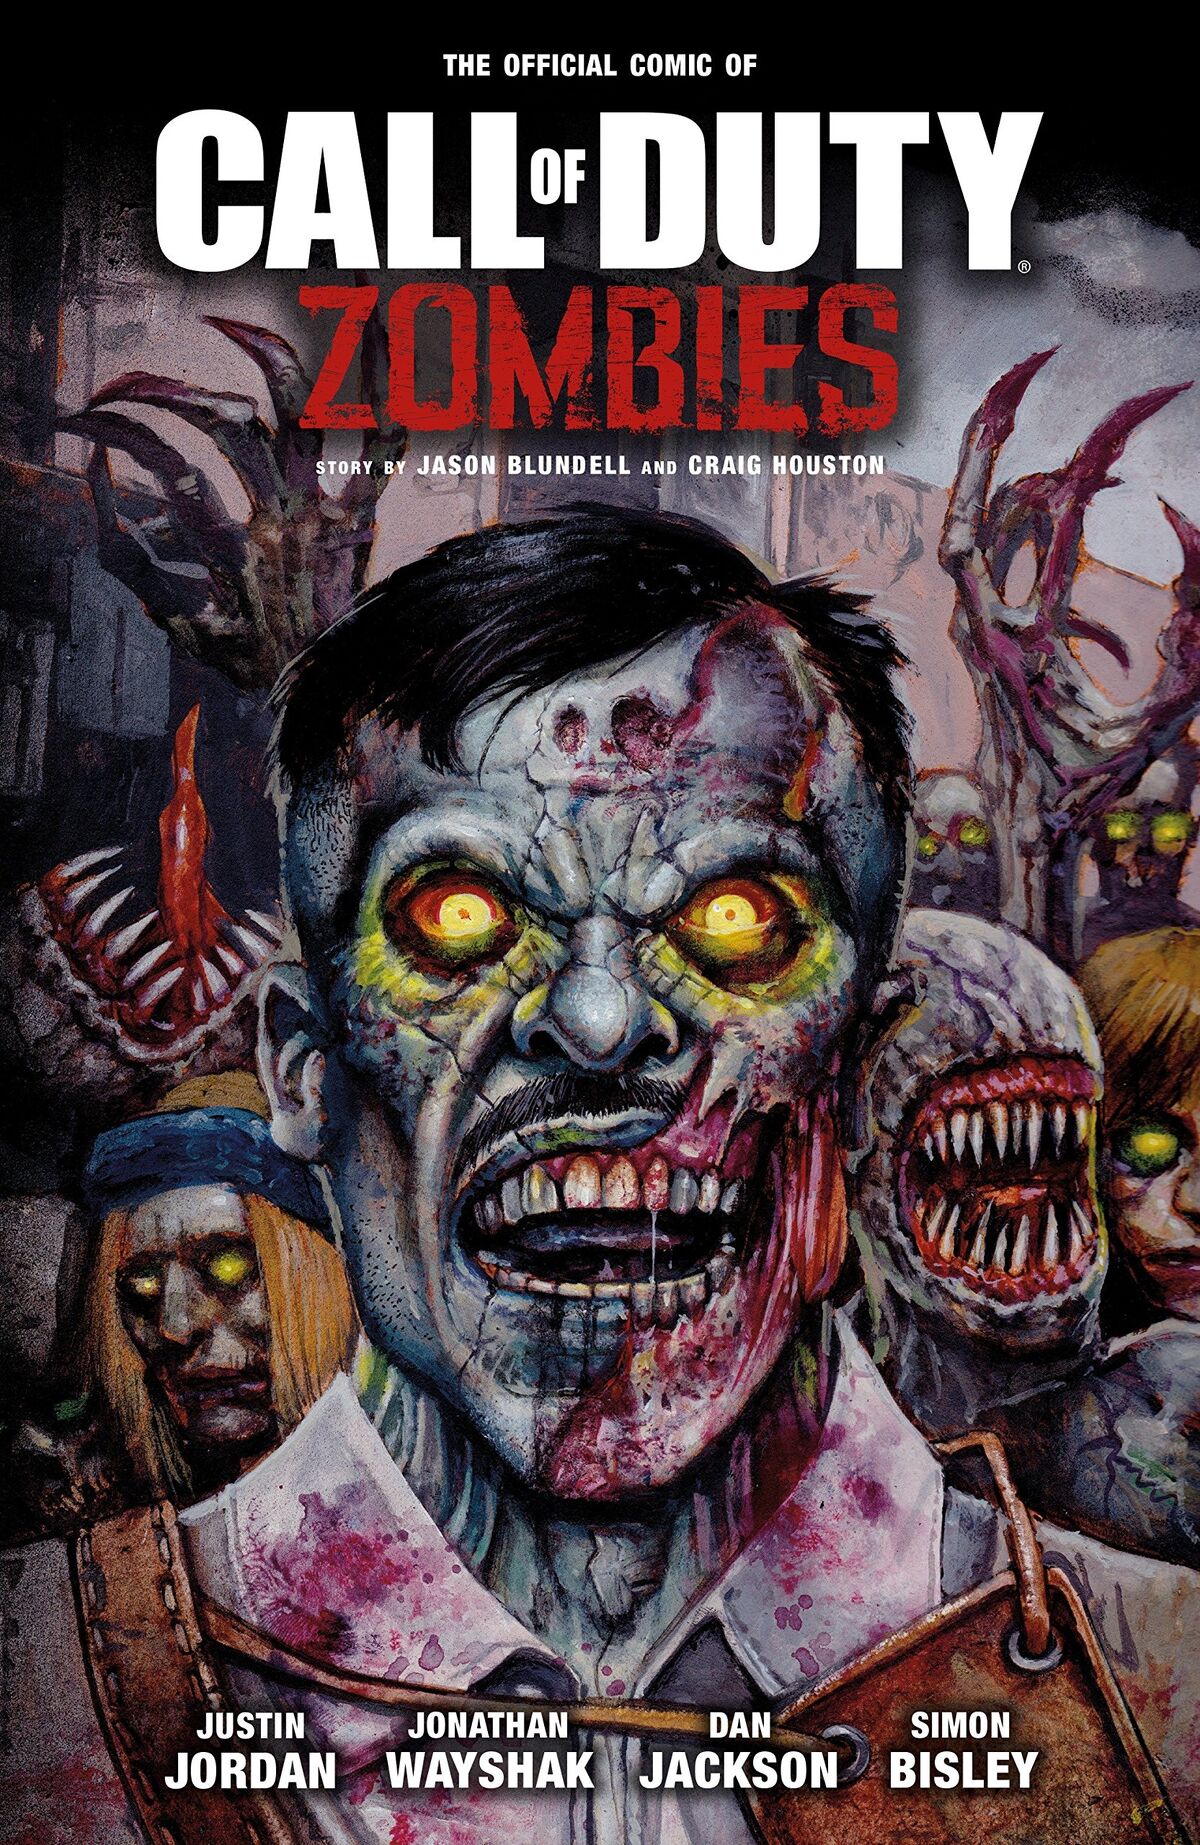 black ops 2 zombies origins poster